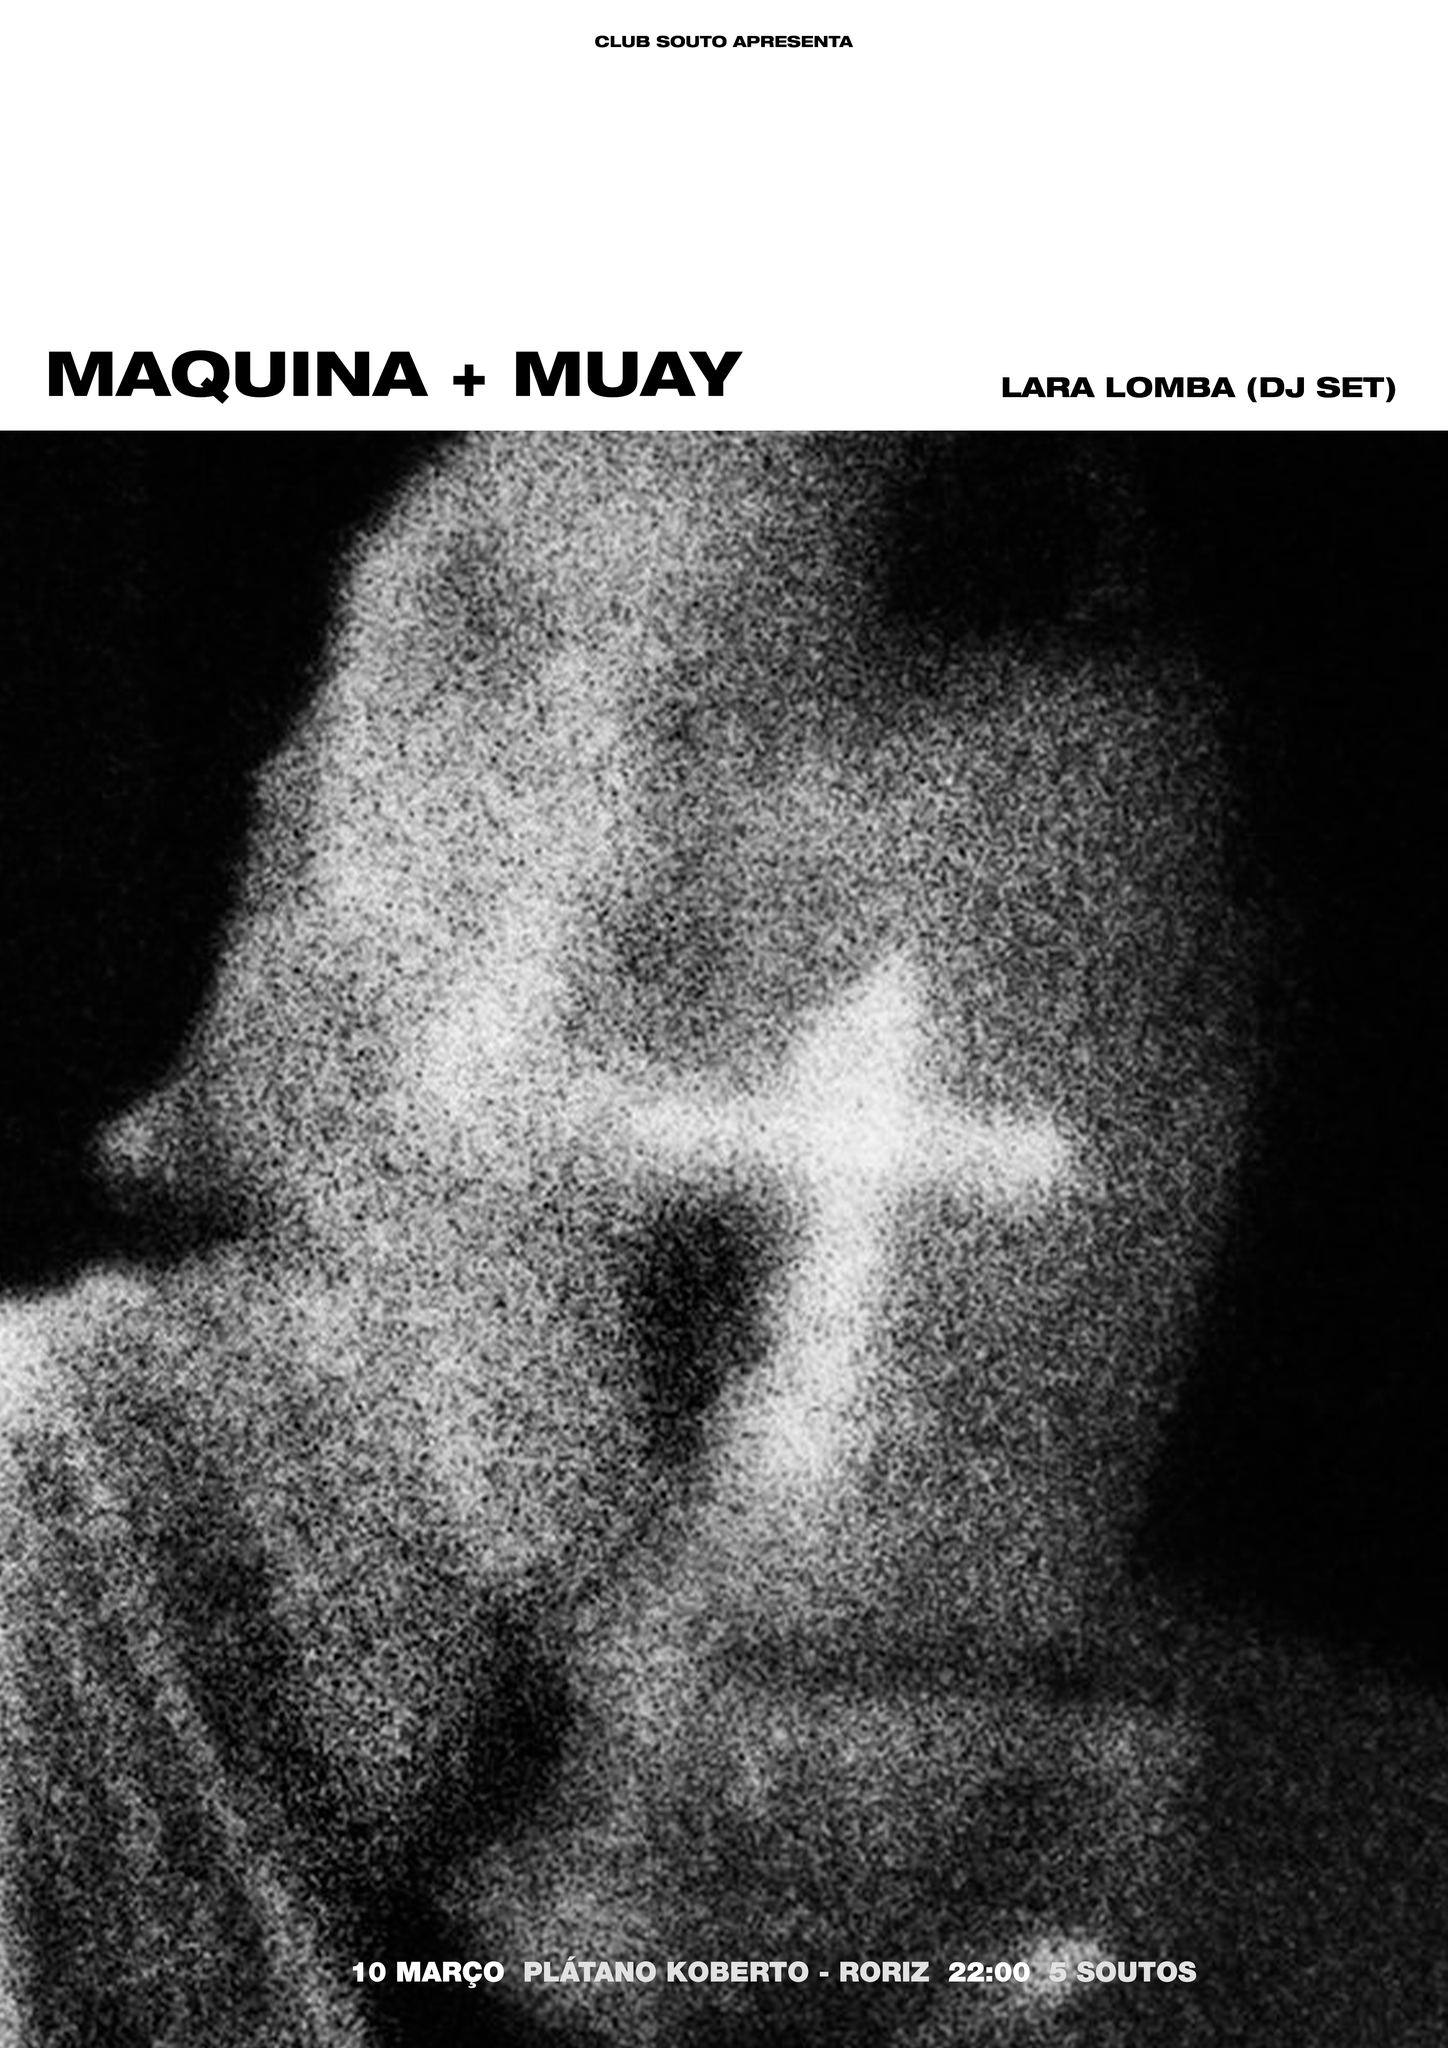 Club Souto / Maquina + MUAY + Lara Lomba (dj set)